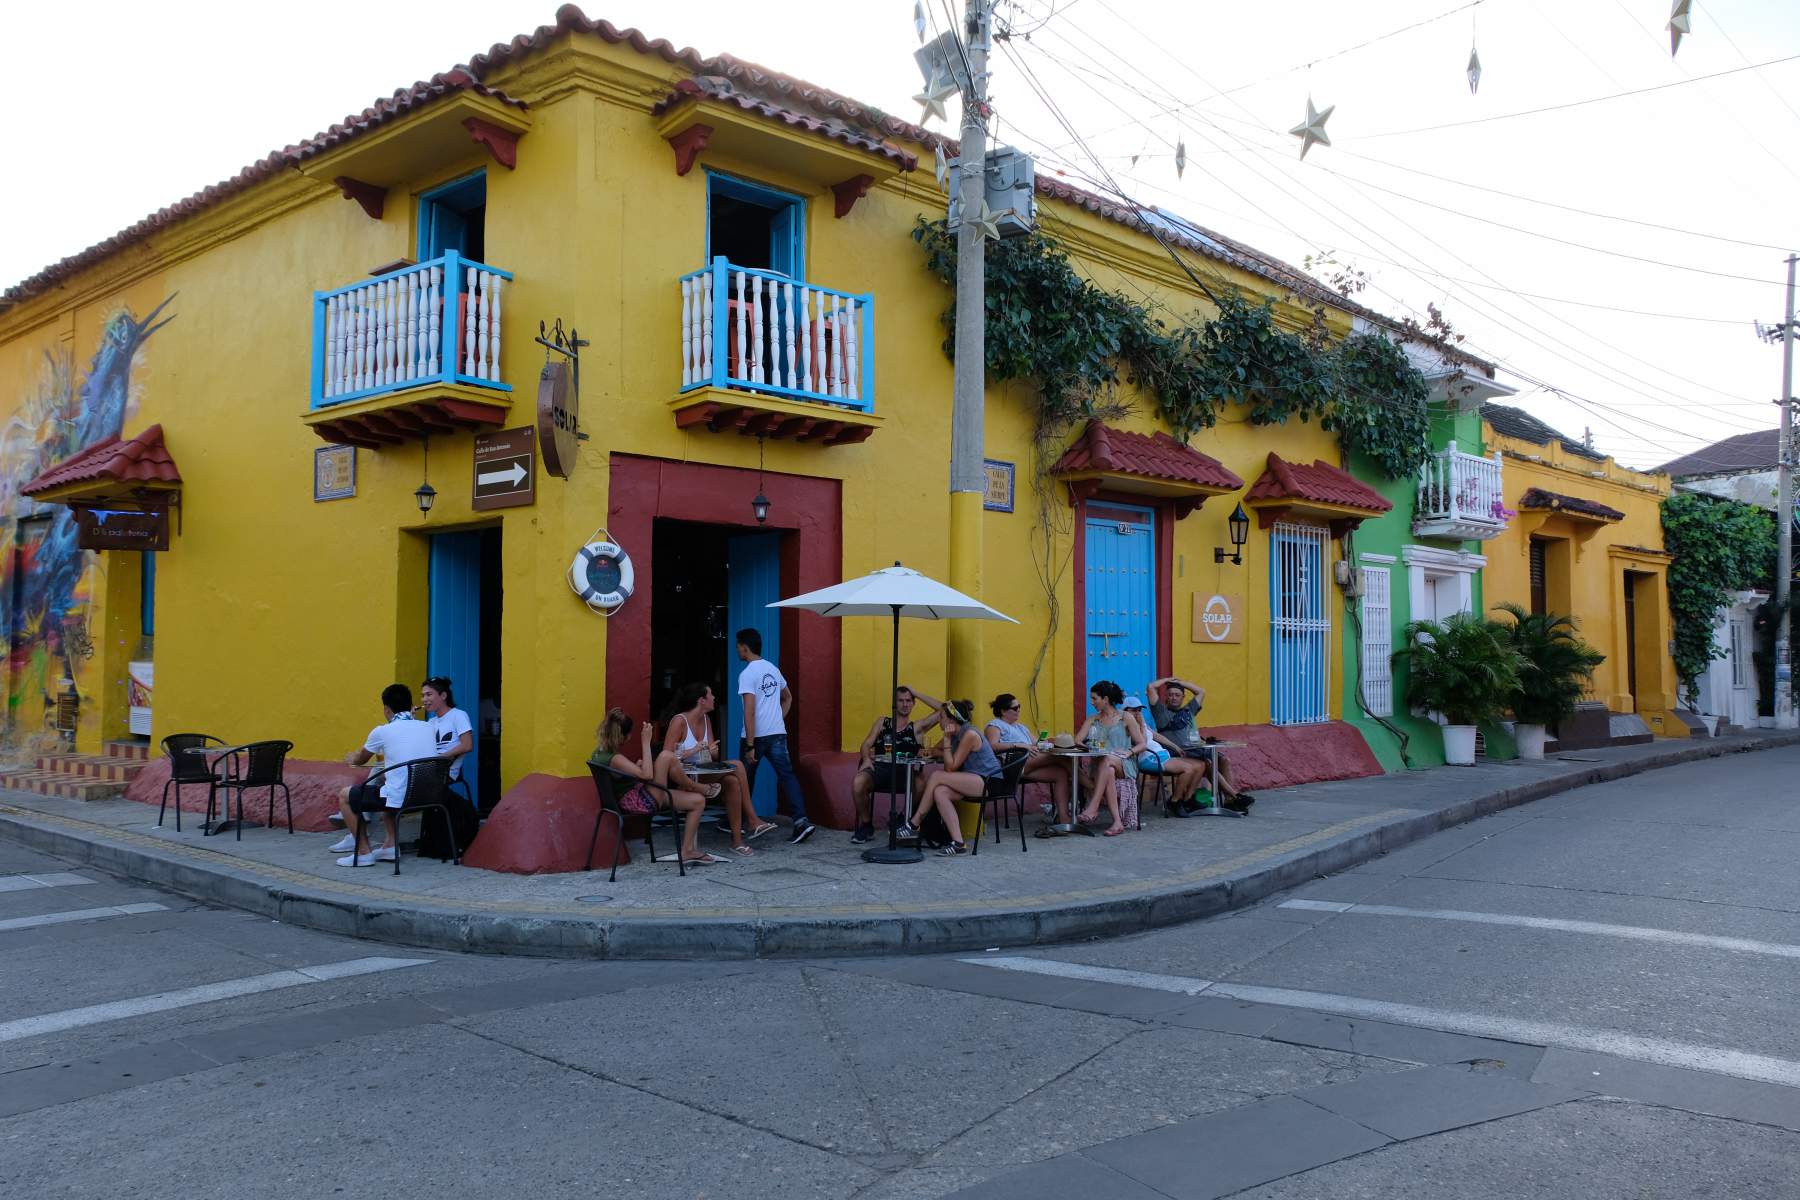 Solar Bar at the Plaza Trinidad, Getsemaní, Cartagena, Colombia